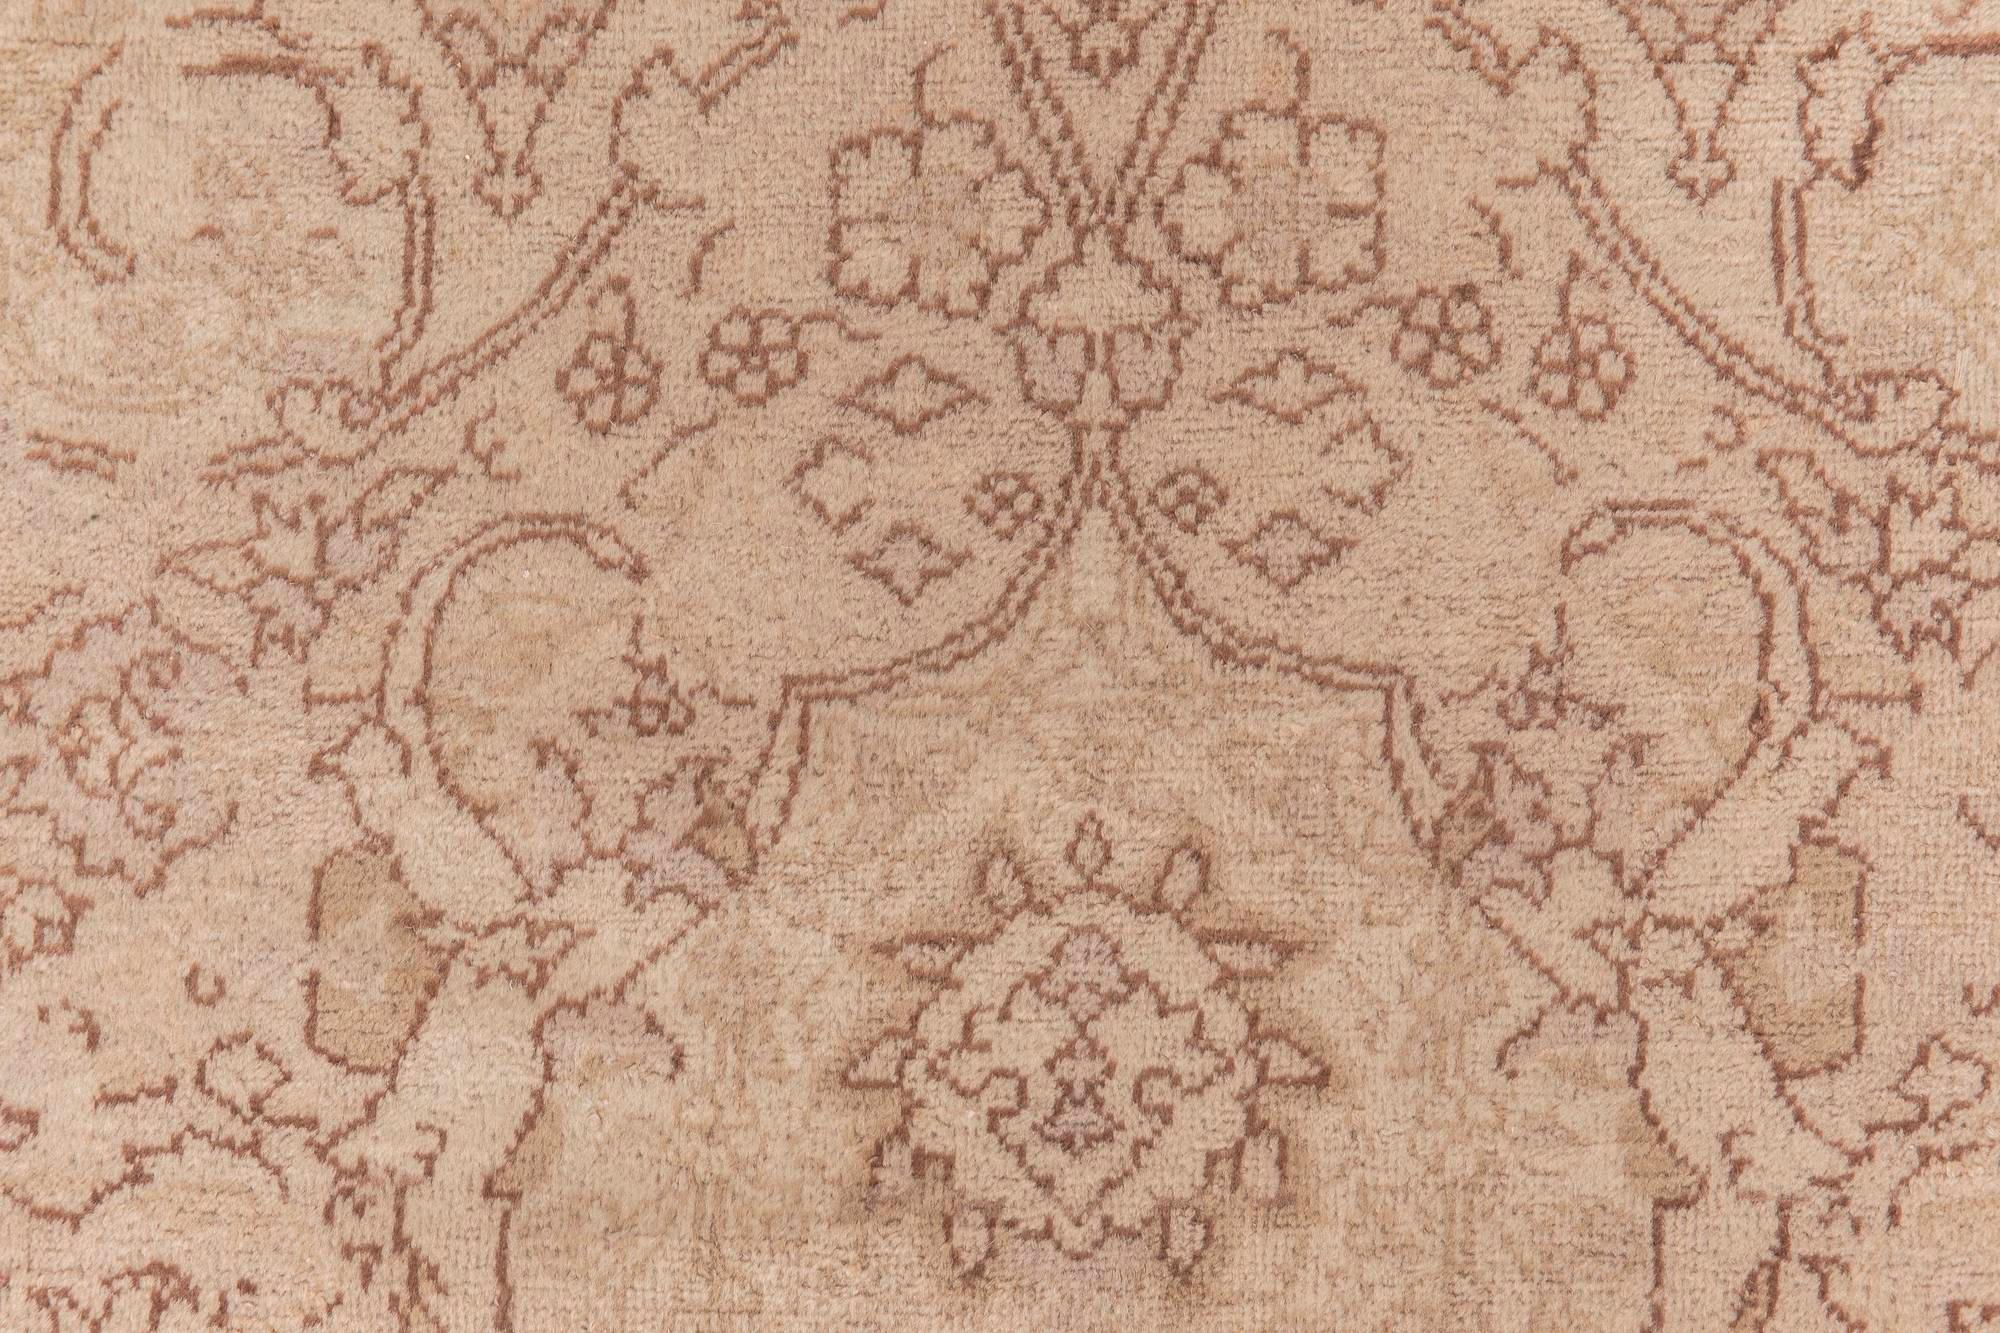 Antique Turkish Sivas botanic handwoven wool carpet
Size: 14'0